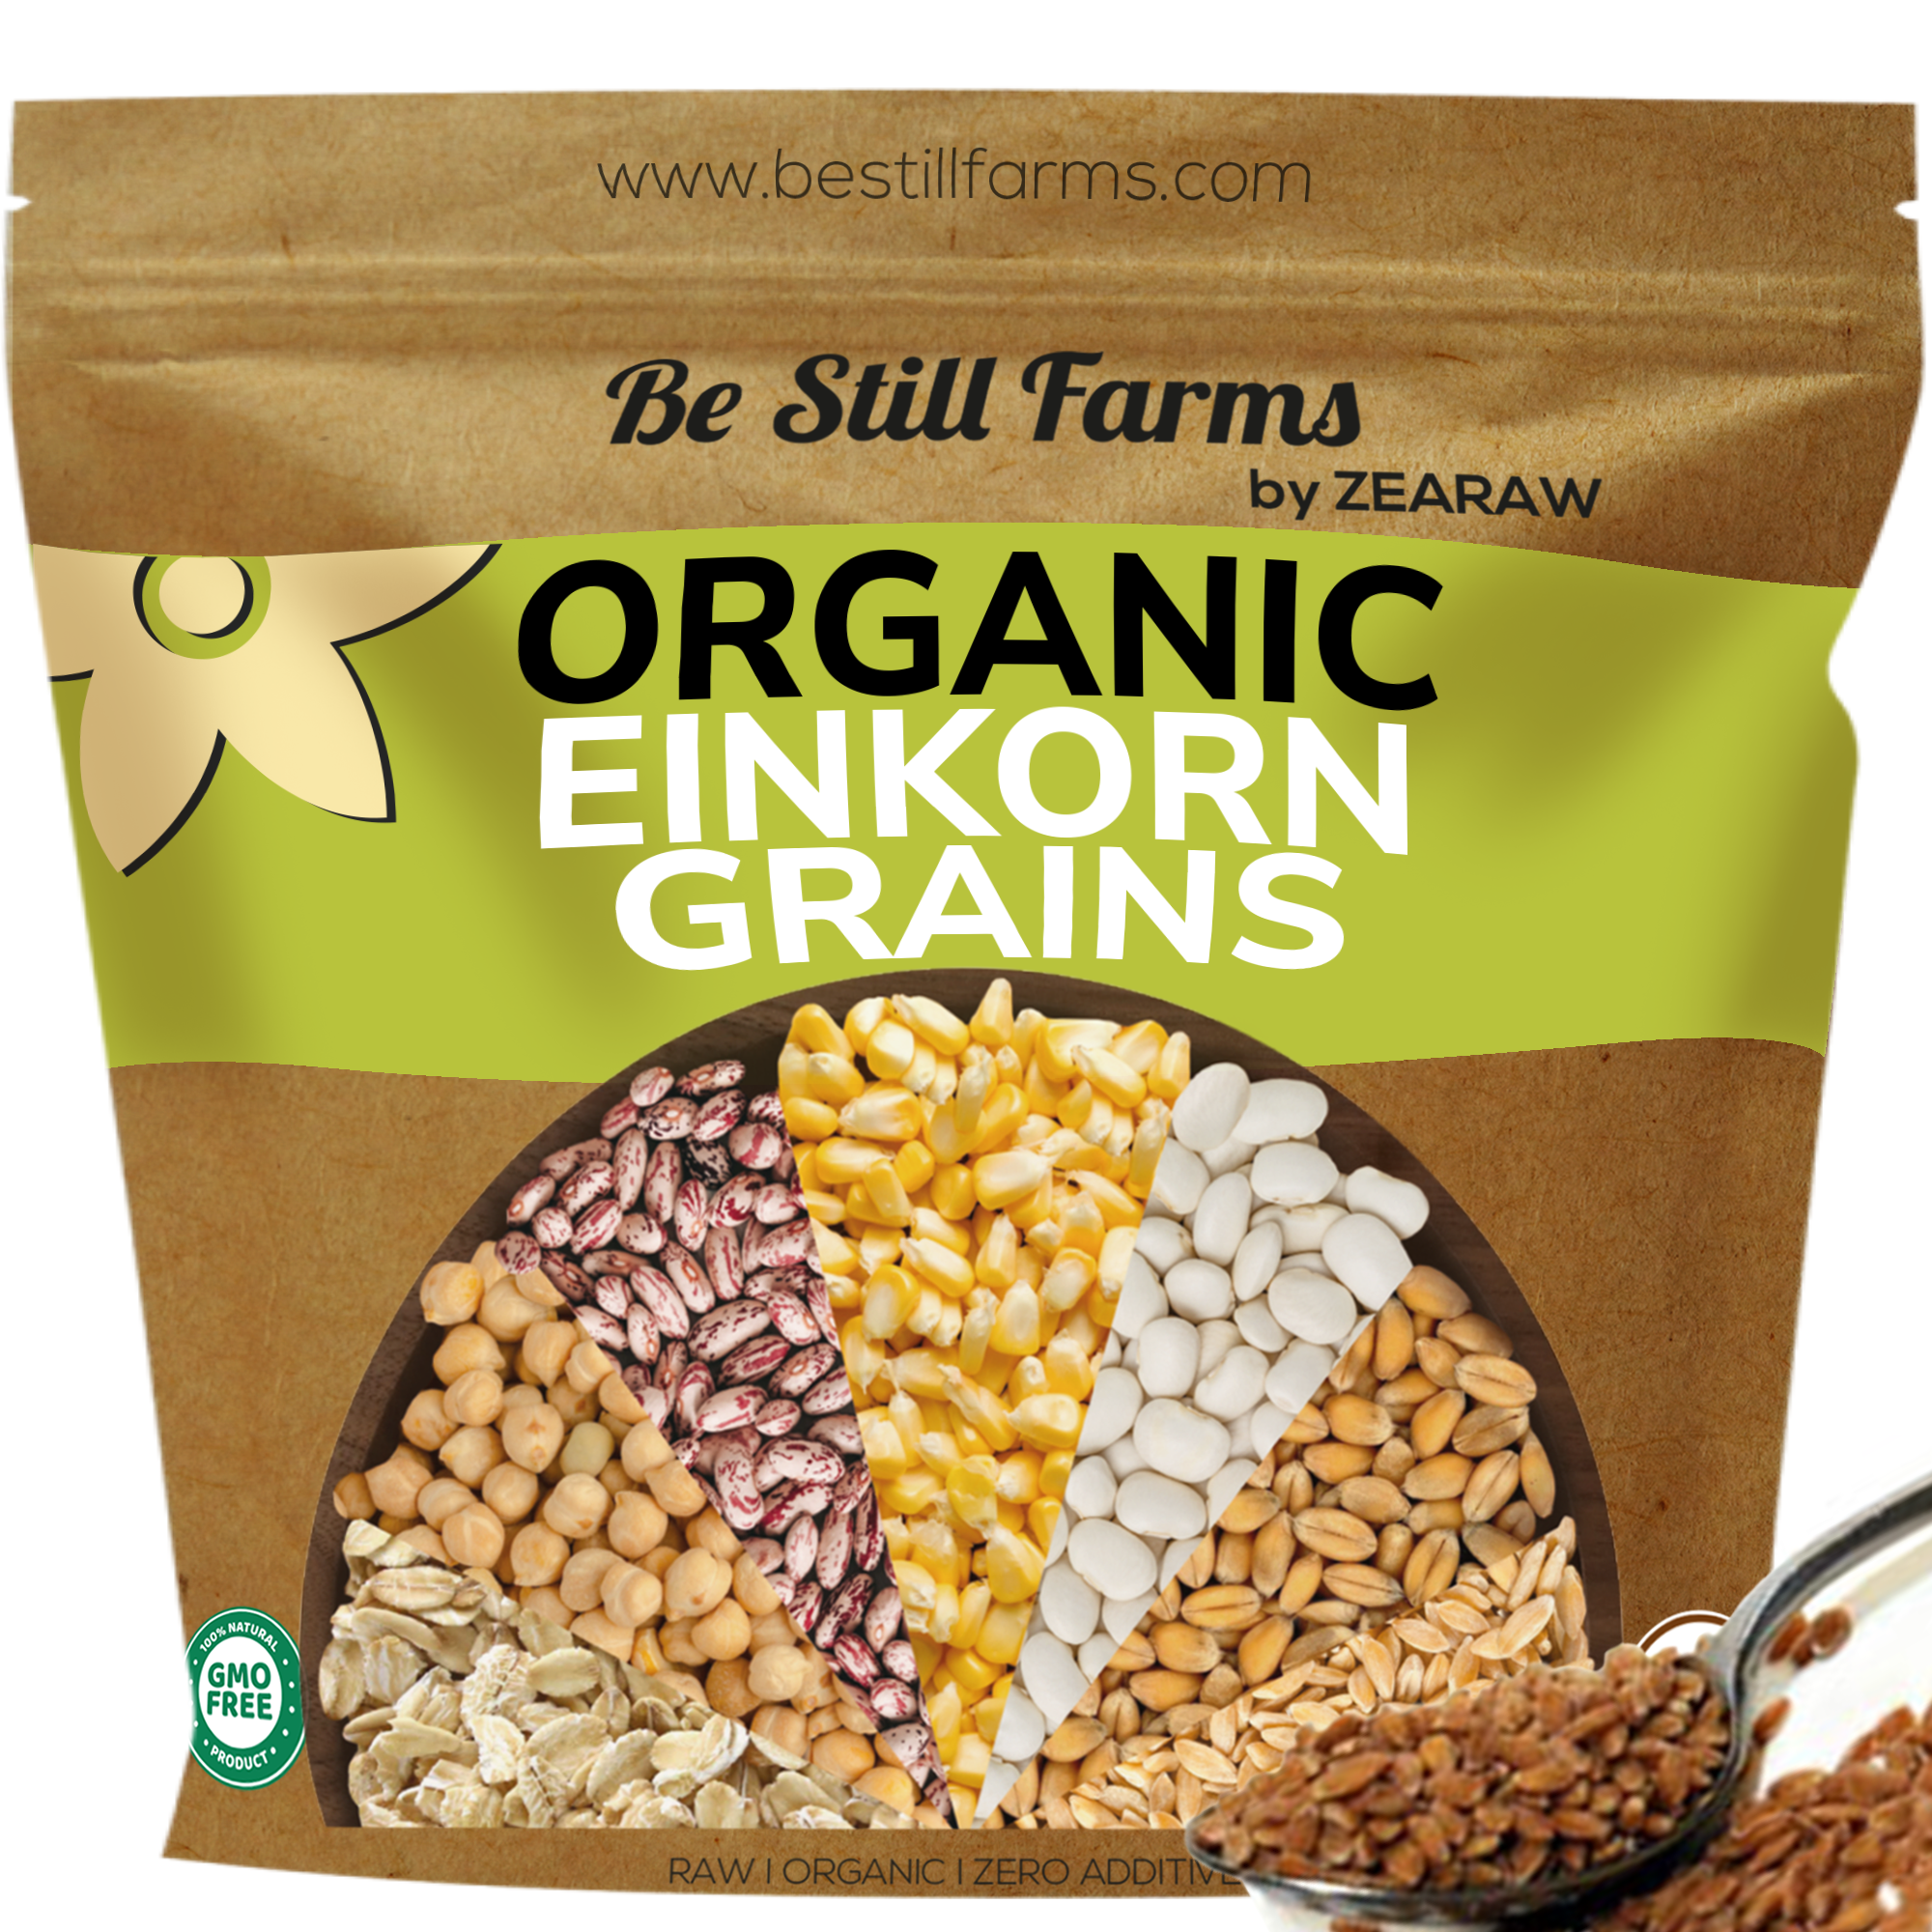 Organic Ancient Grains